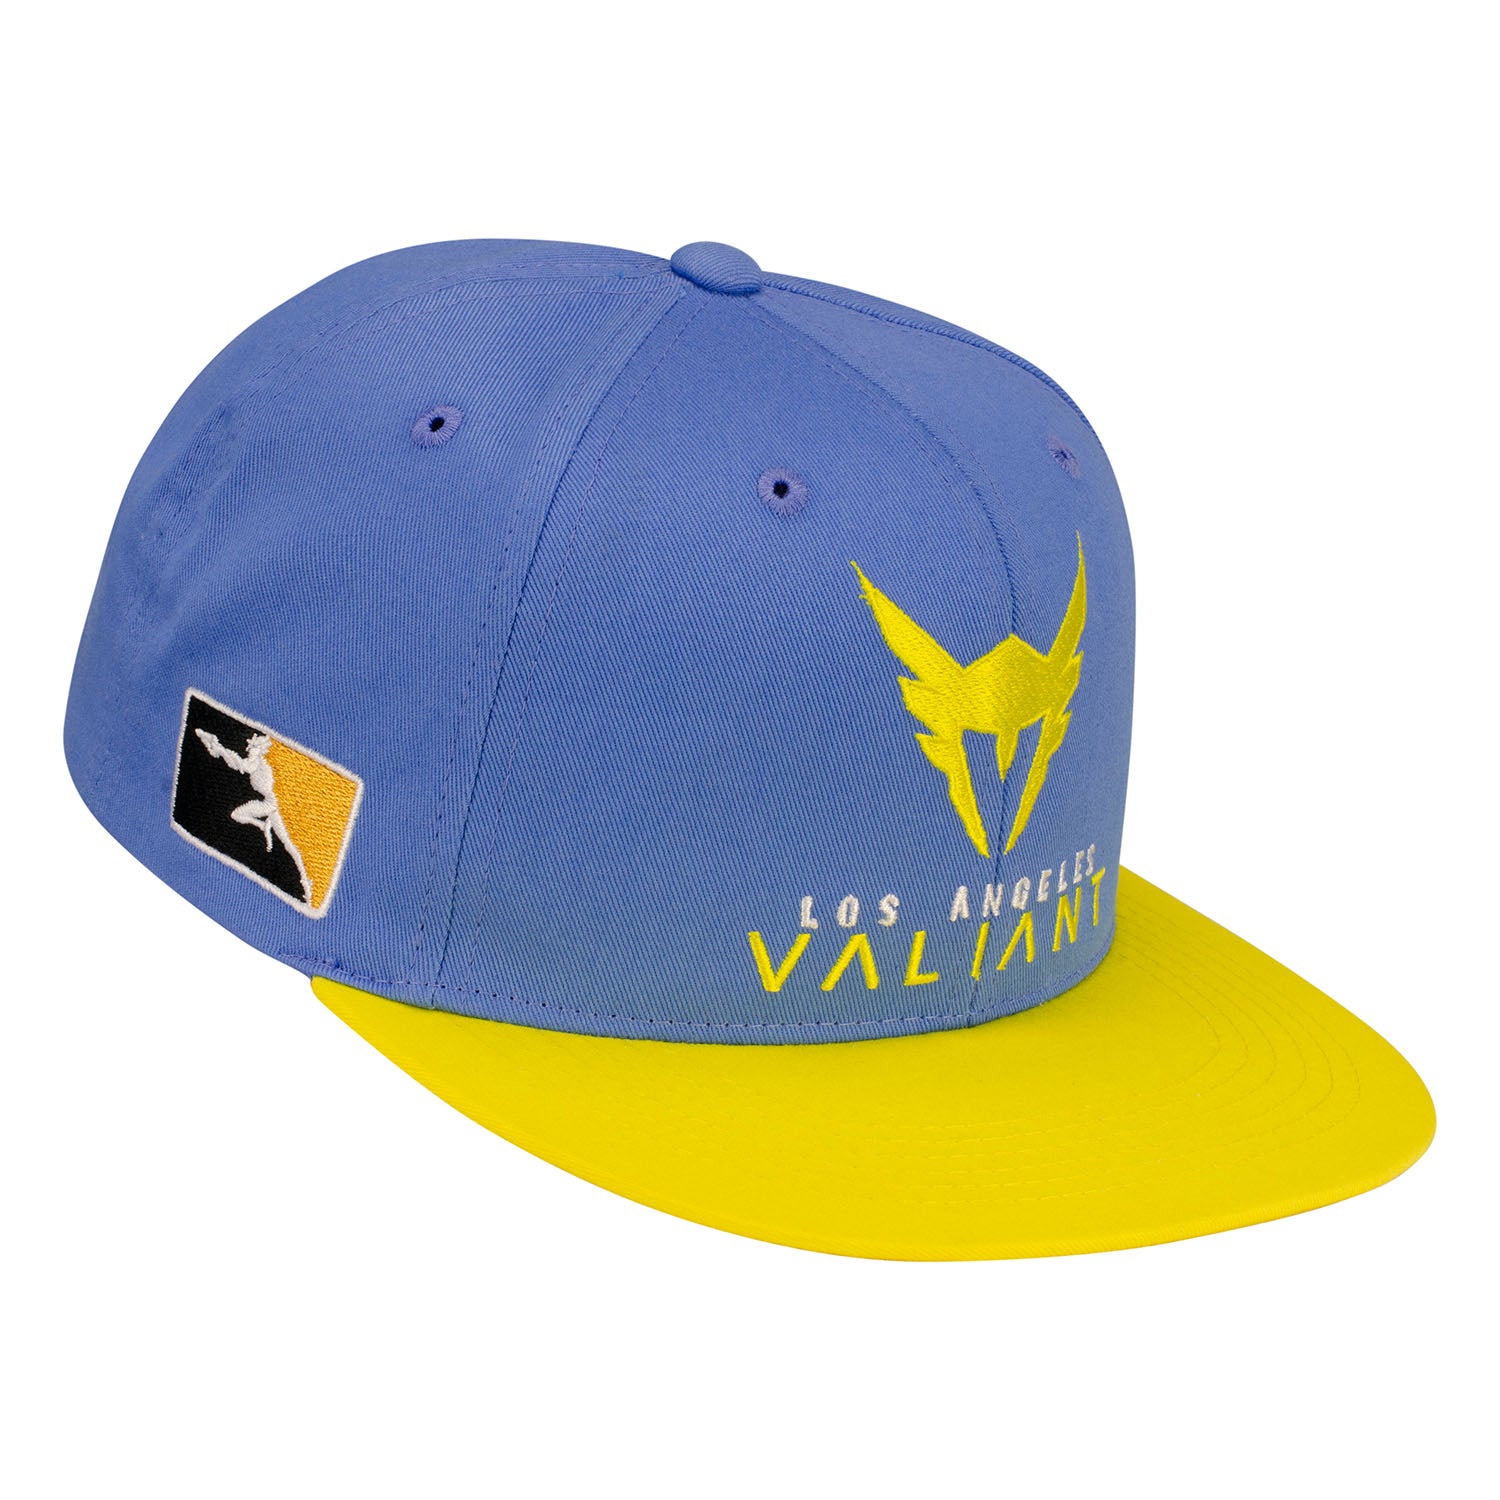 Los Angeles Valiant Blue Snapback Hat - Right View